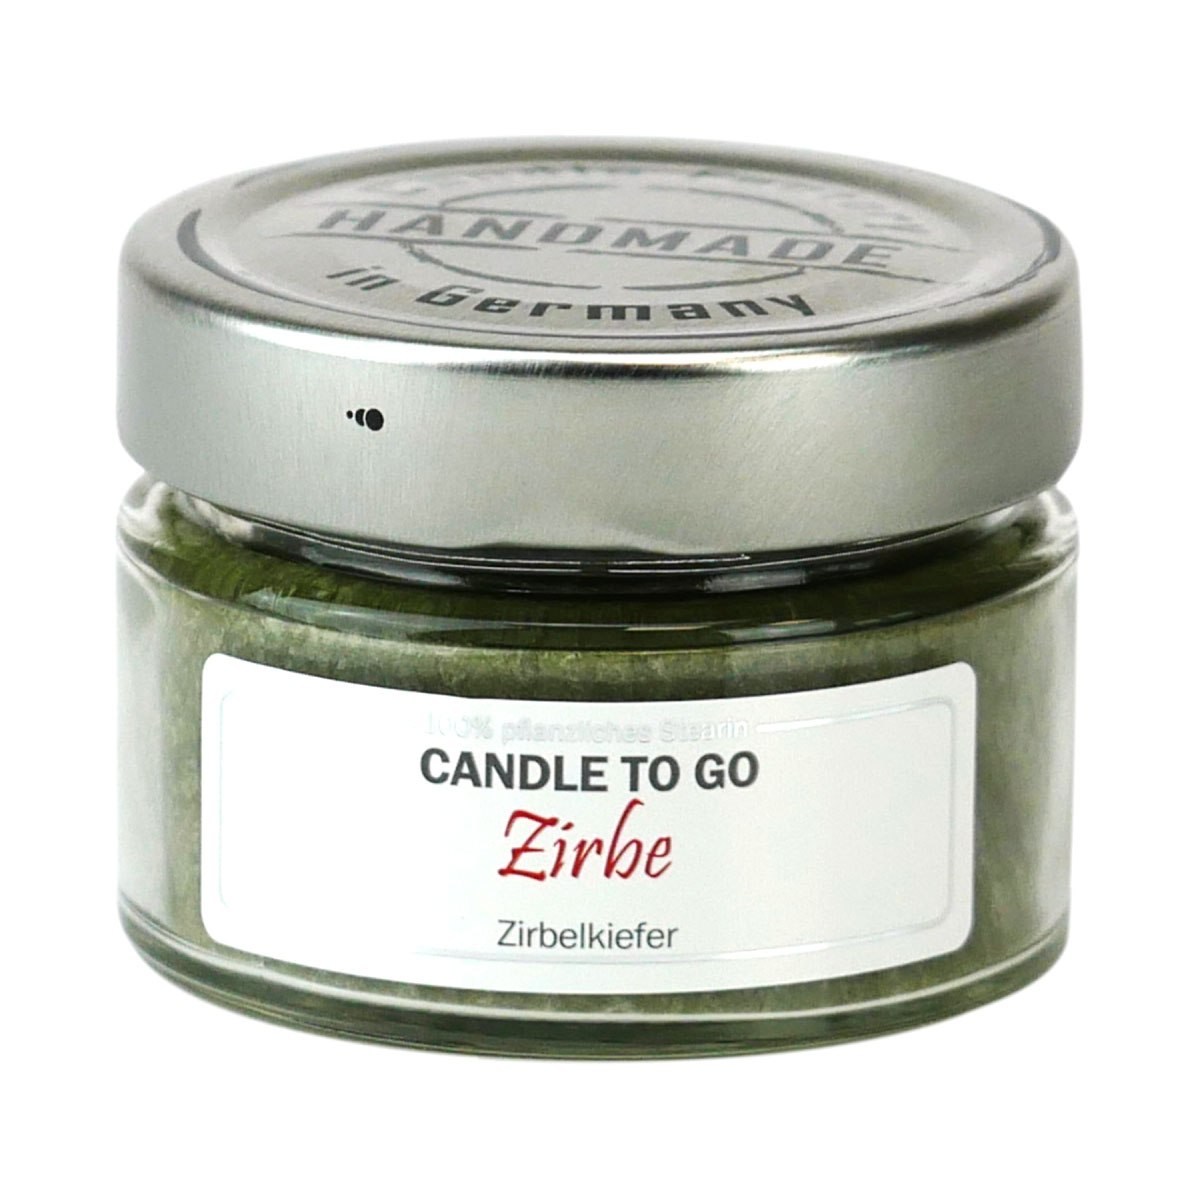 Zirbe - Candle to Go Duftkerze von Candle Factory